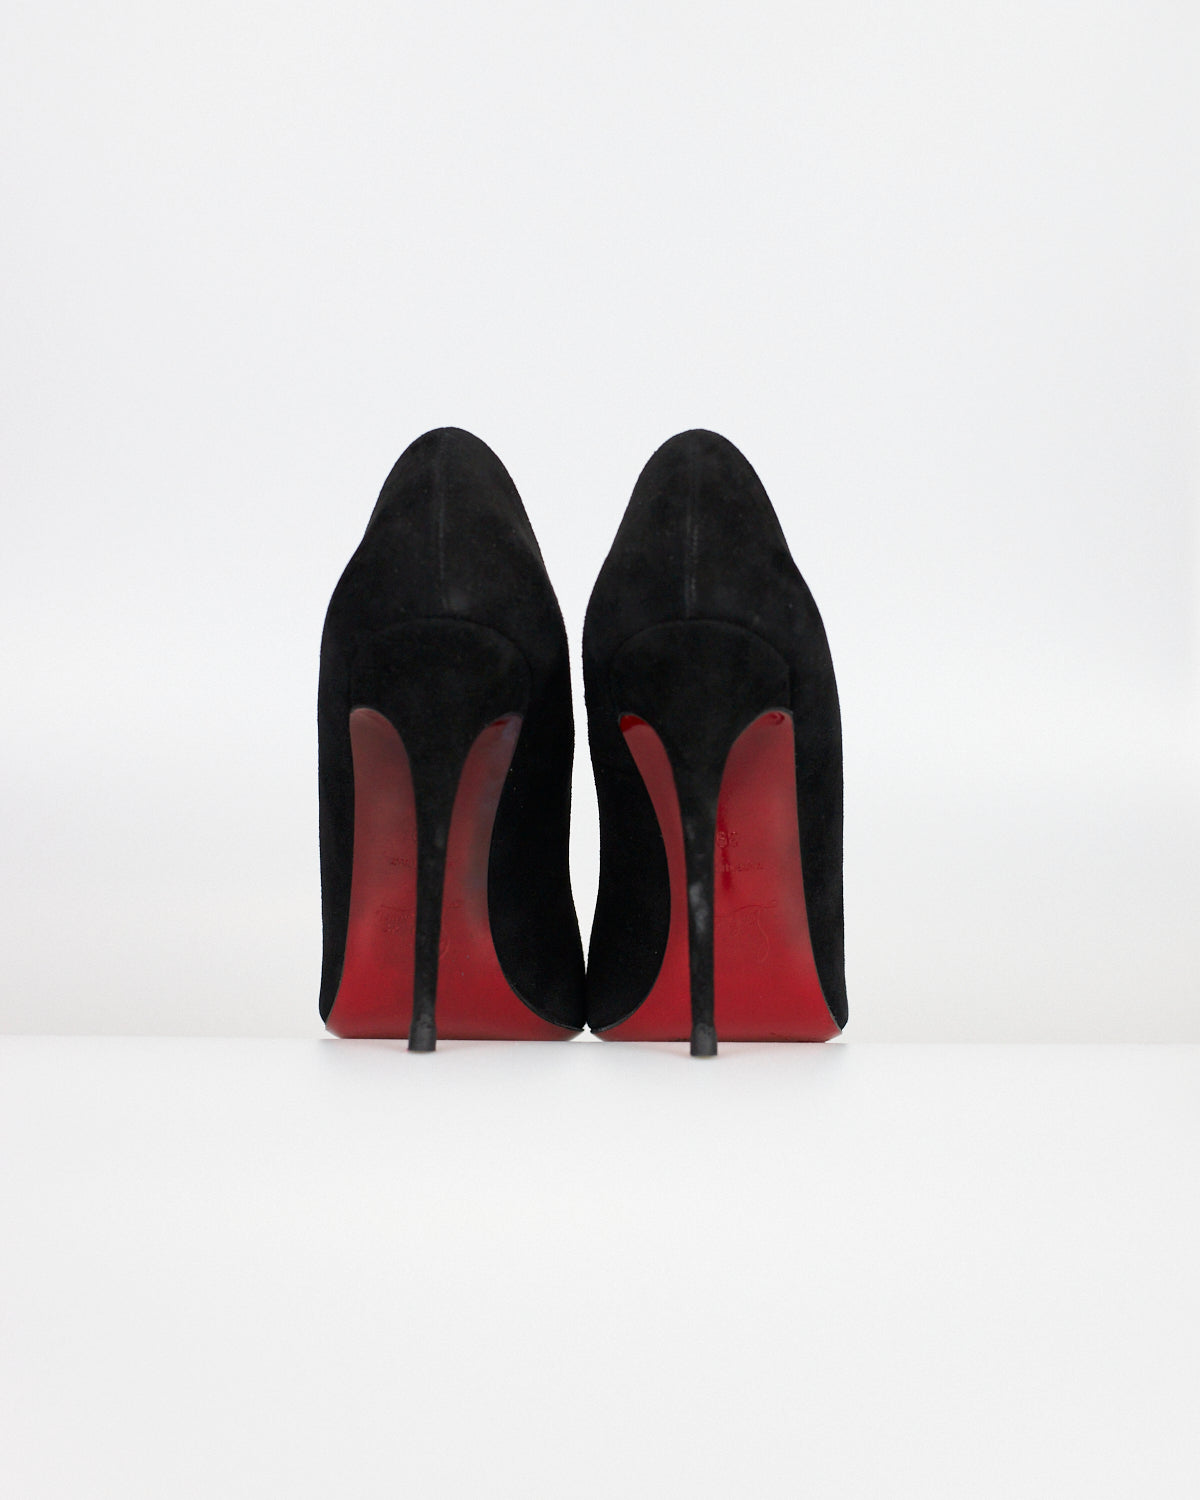 Sapatos de camurça CHRISTIAN LOUBOUTIN Kate 100 - tamanho 39 